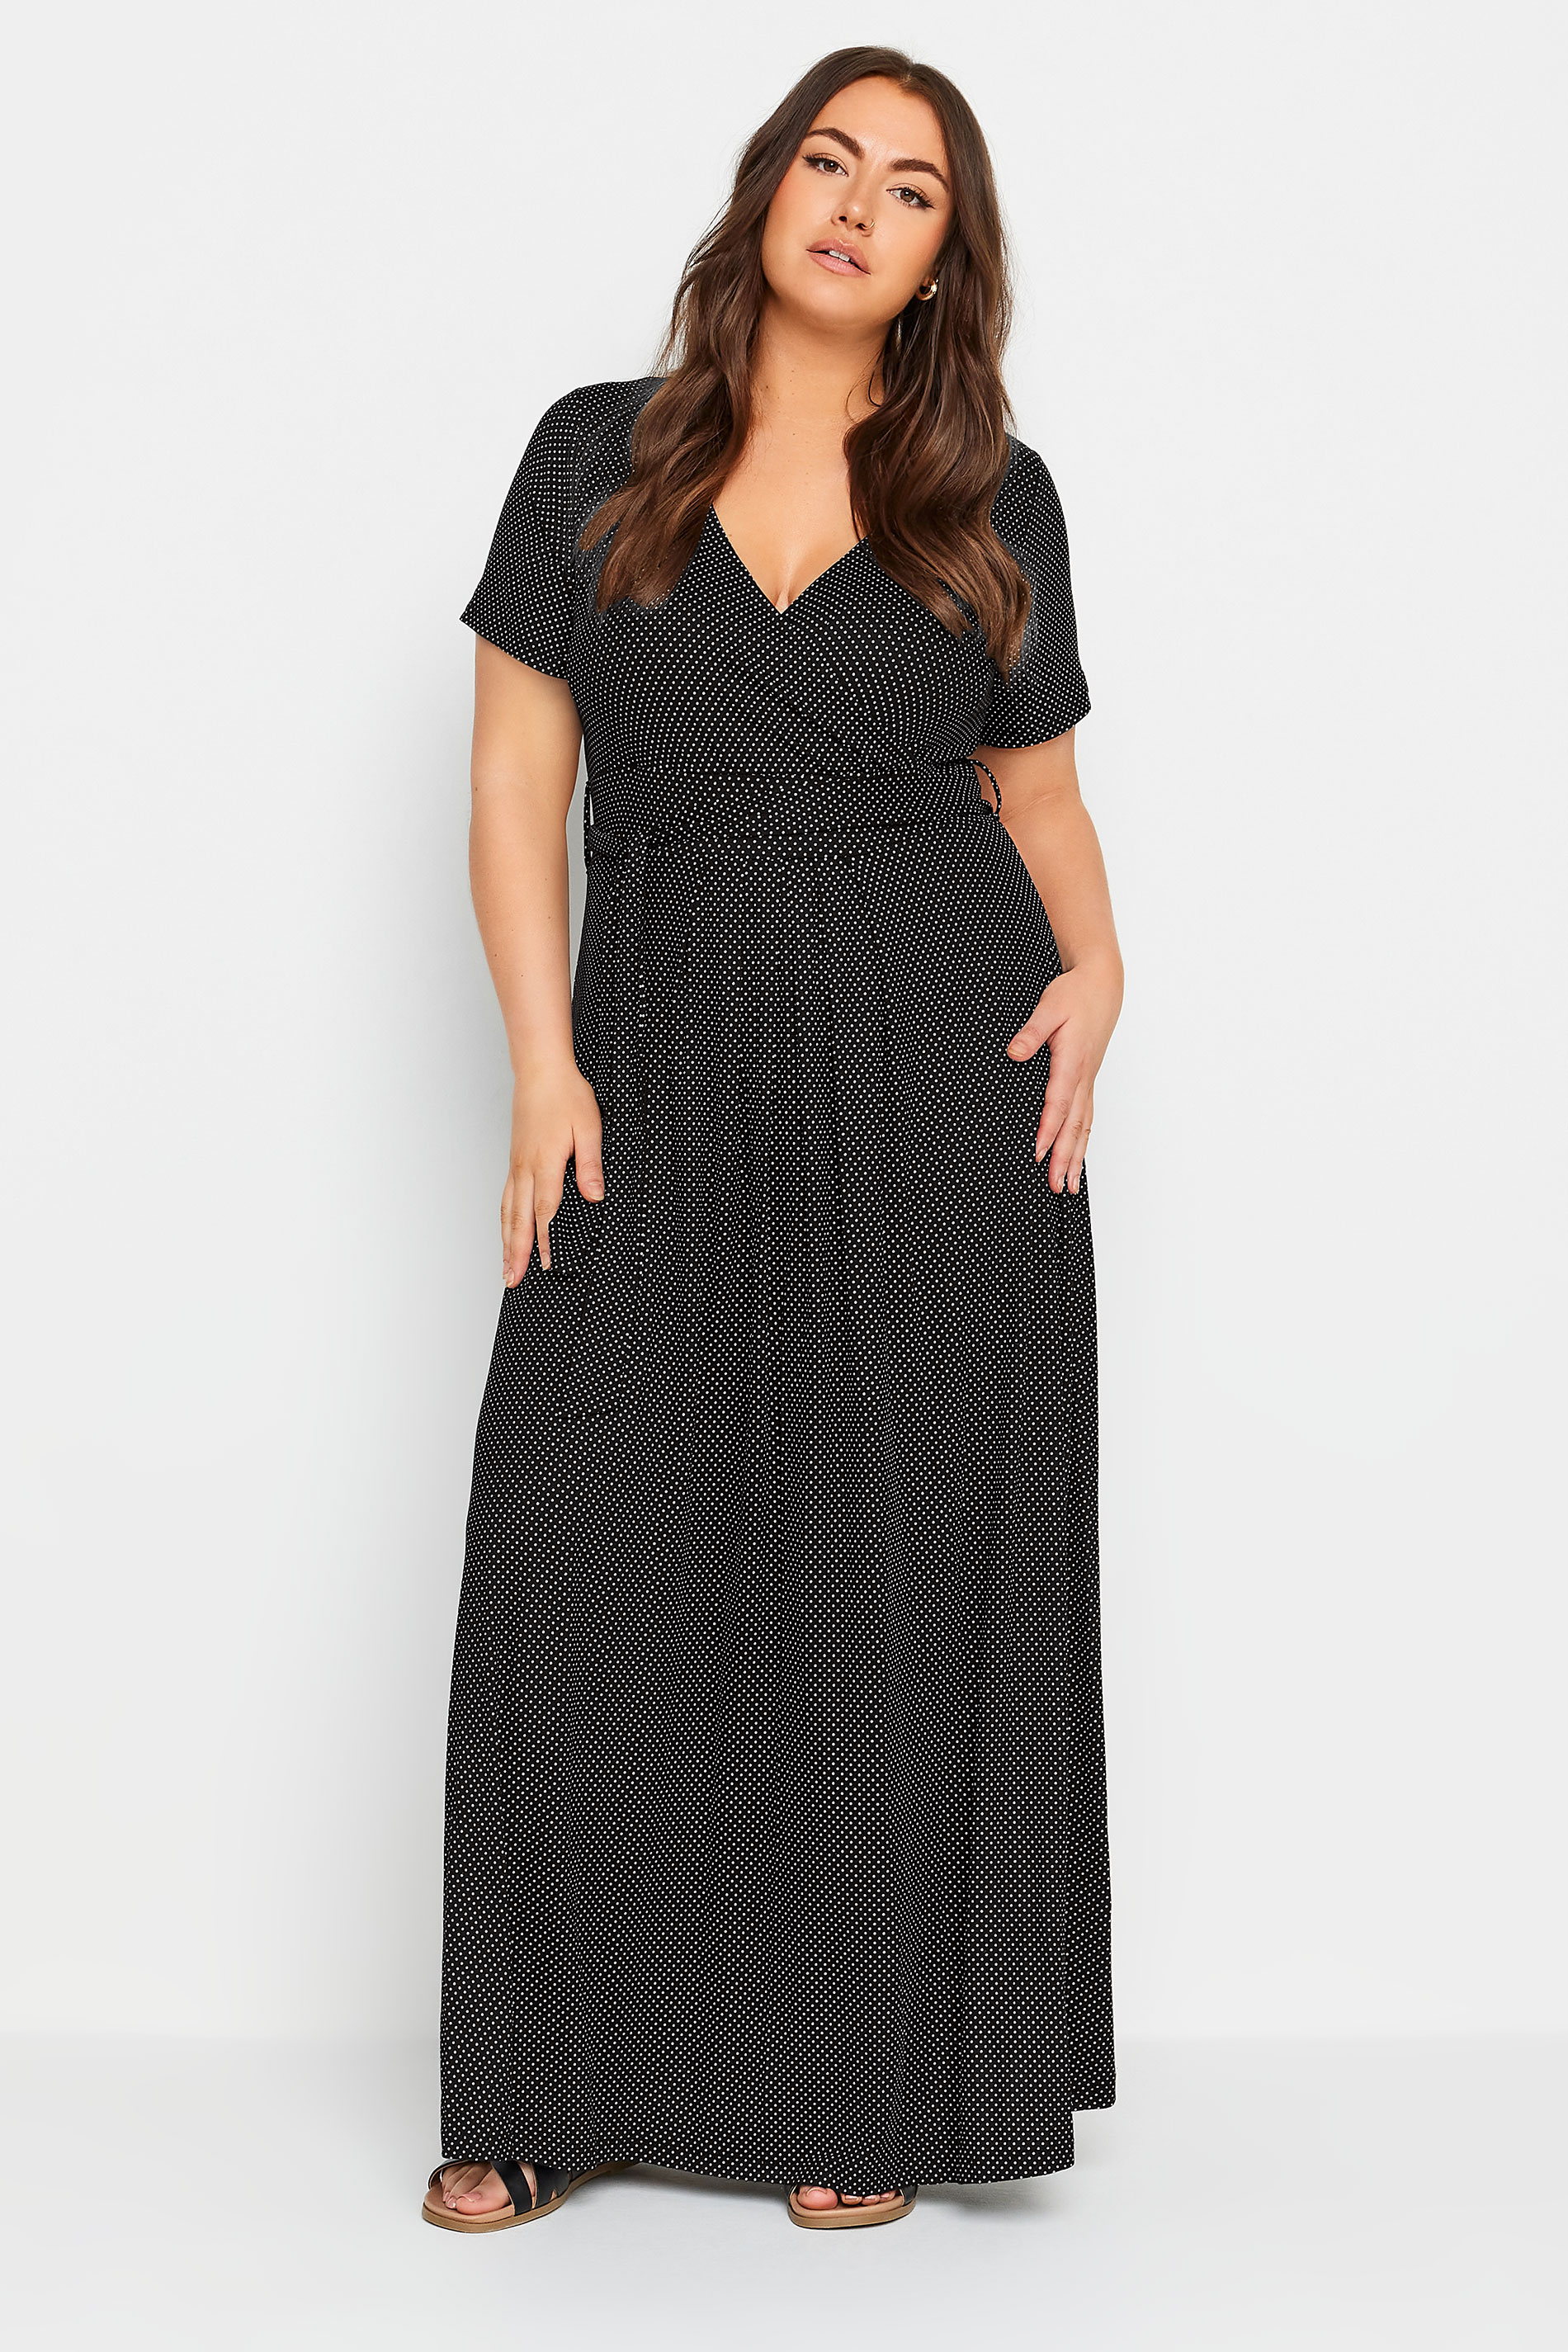 YOURS Plus Size Black Dot Print Maxi Wrap Dress | Yours Clothing 2